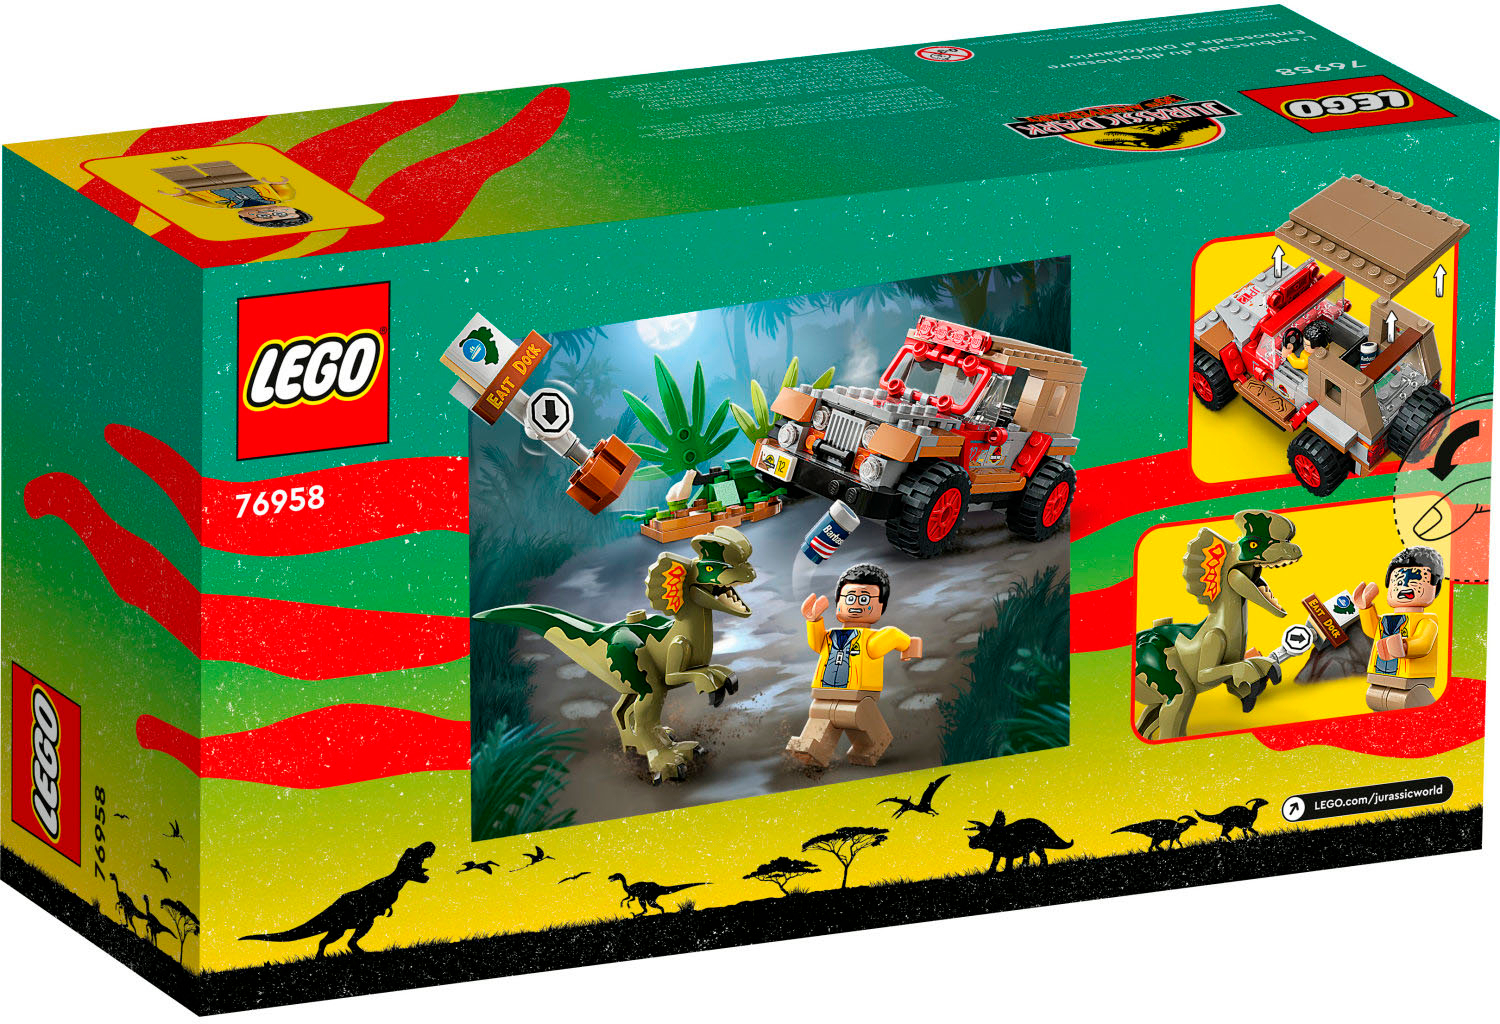 LEGO Jurassic World - Parking Garage - Free Play (1080p60HD) 